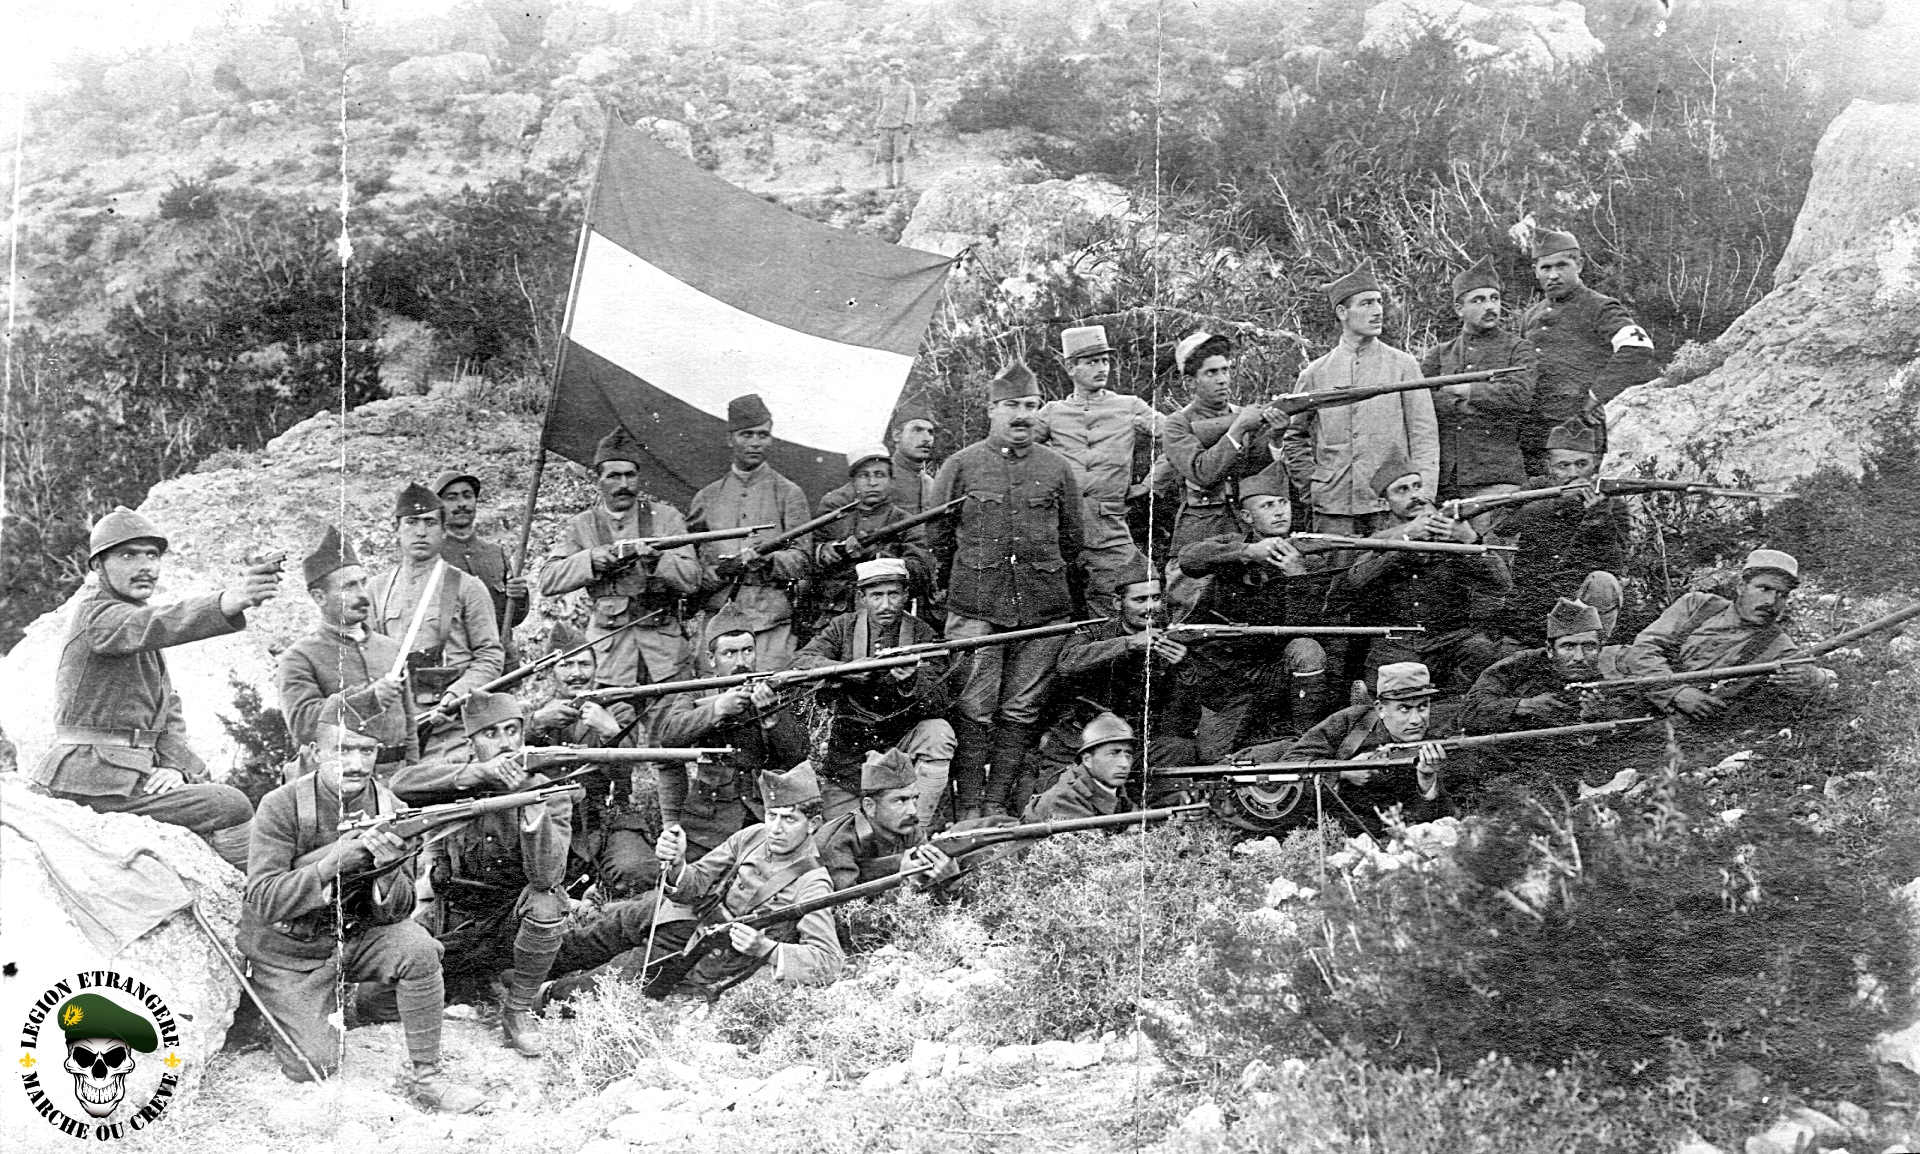 legion-volunteers-from-tomarza-fighting-in-the-armenian-legion-picture-taken-in-cyprus.jpg